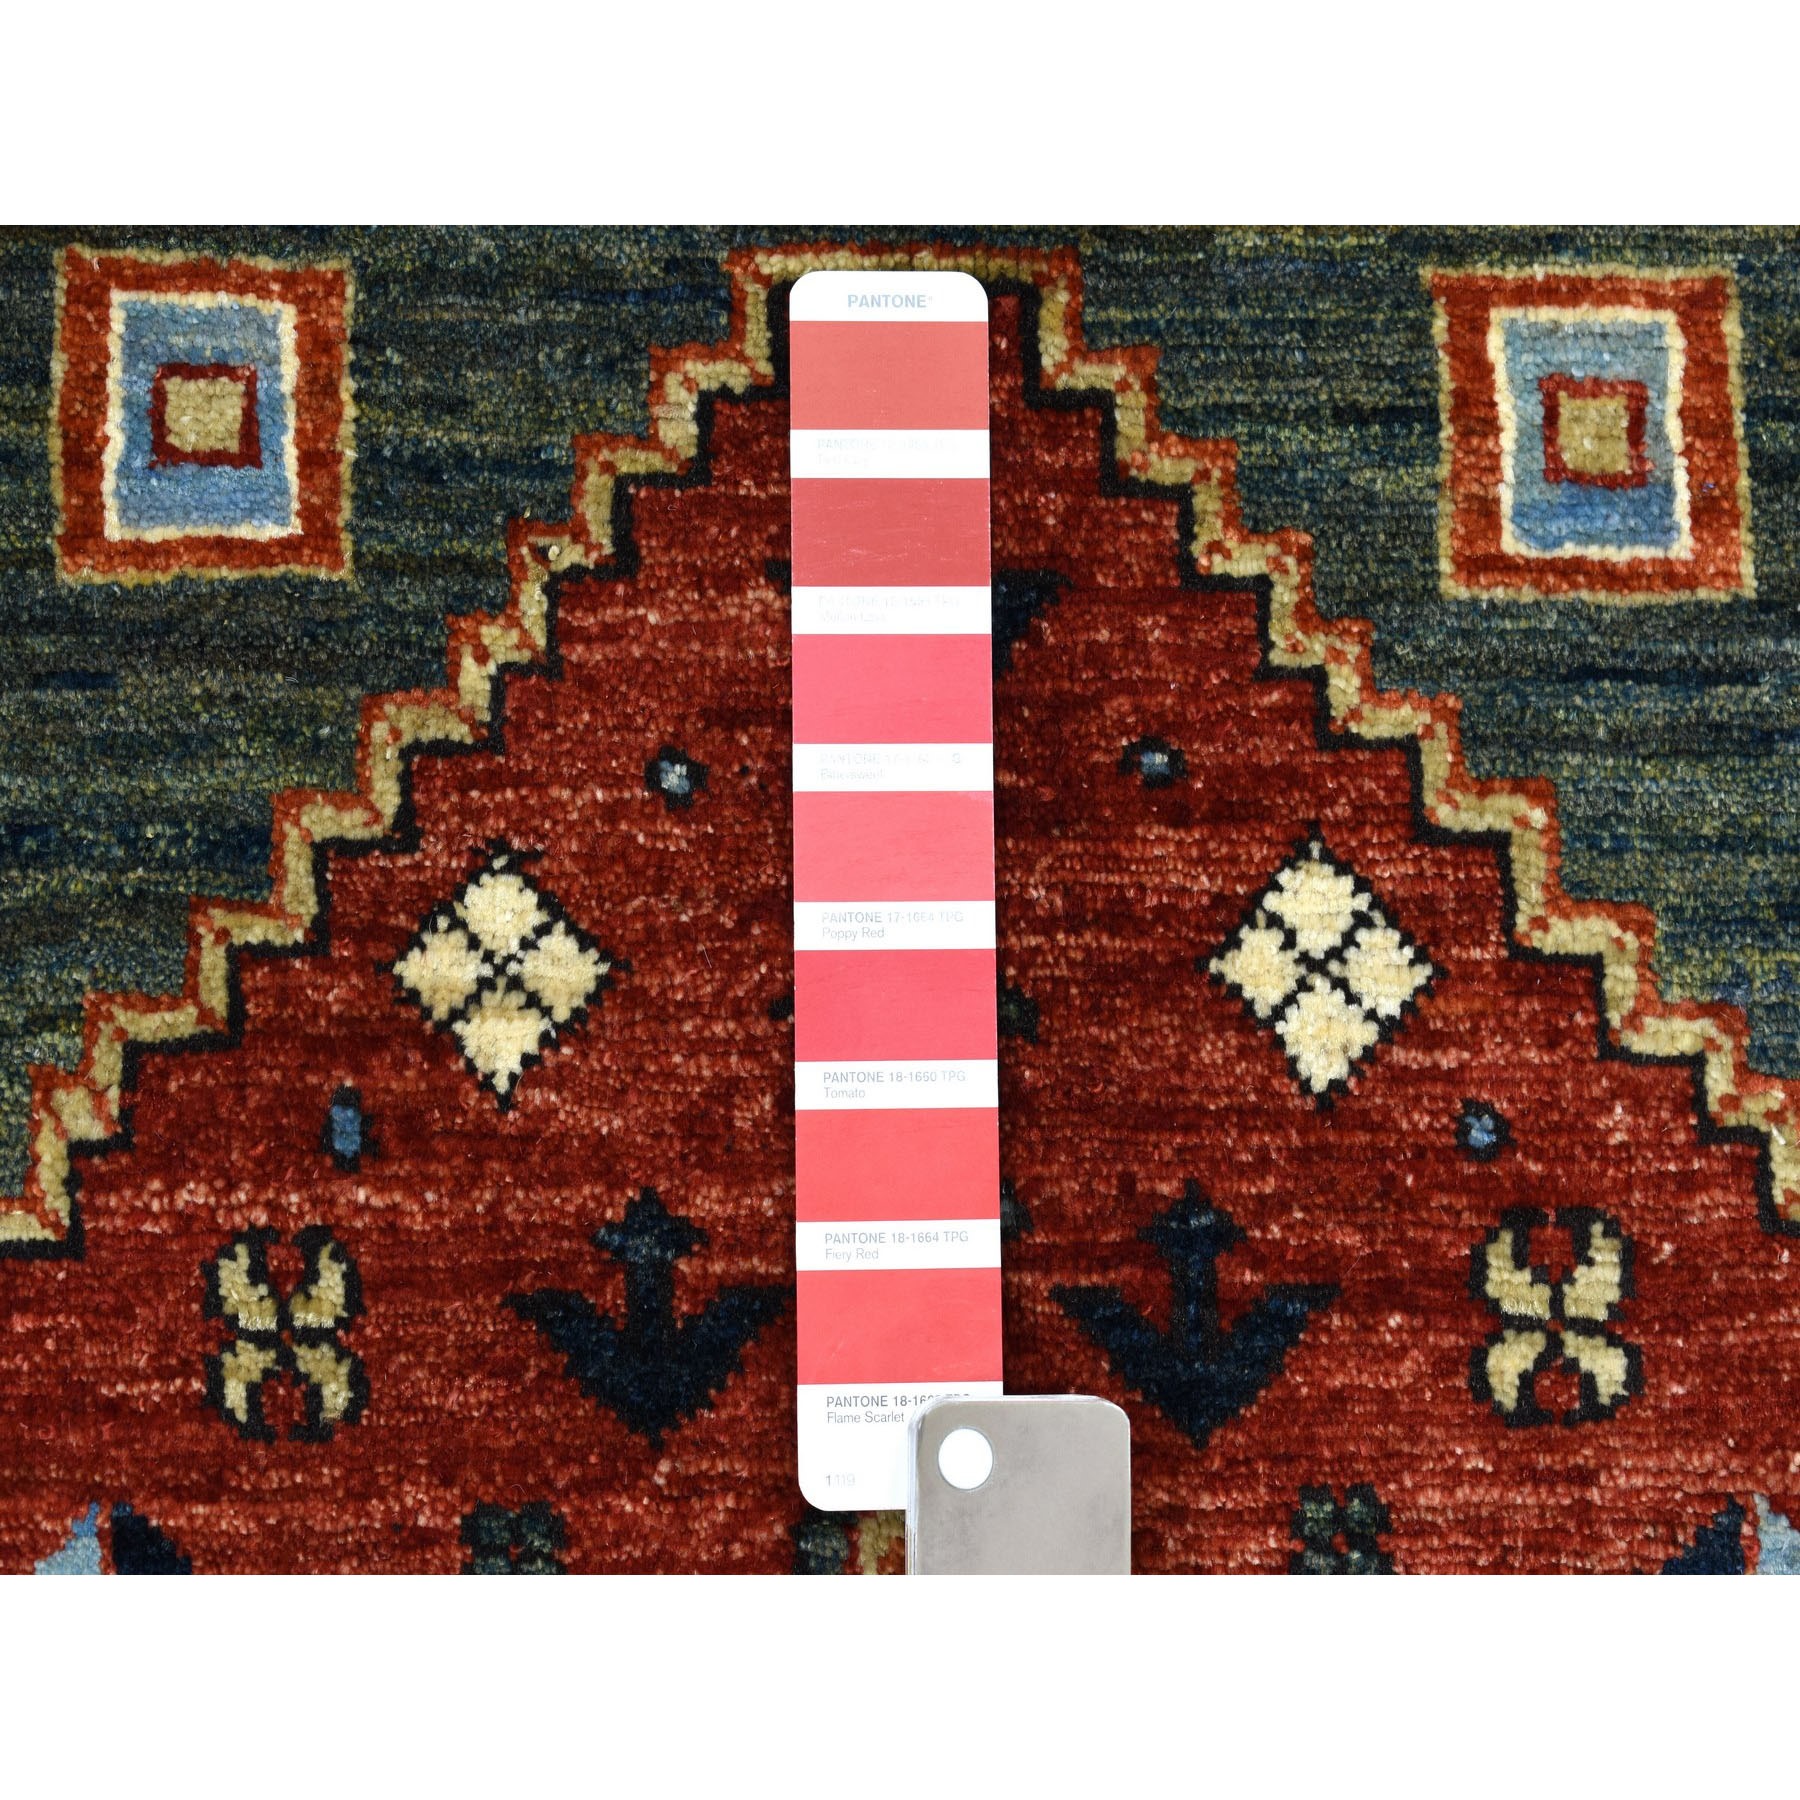 3-3 x4-10  Red Afghan Ersari Heriz Design Pure Wool Hand Knotted Oriental Rug 